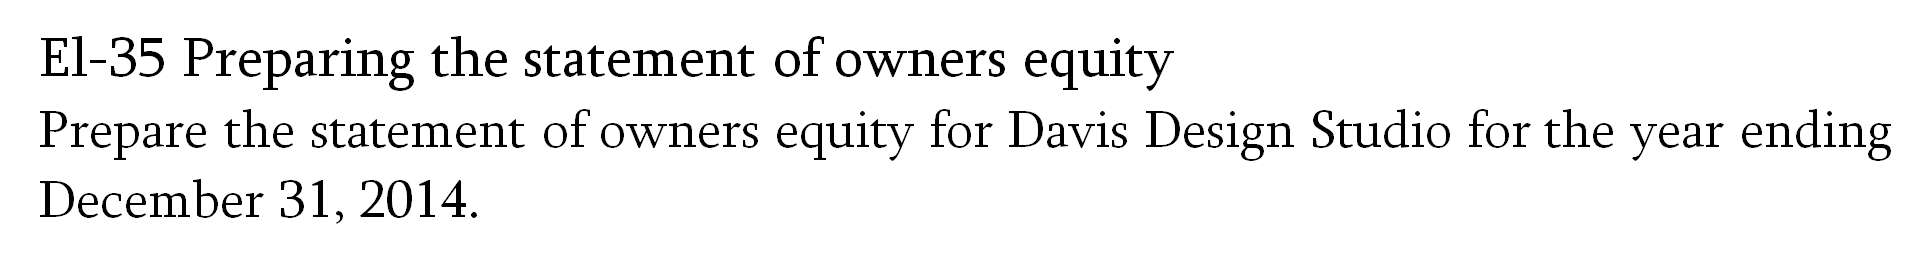 Prepare the statement of owners equity for Davis Design Studio